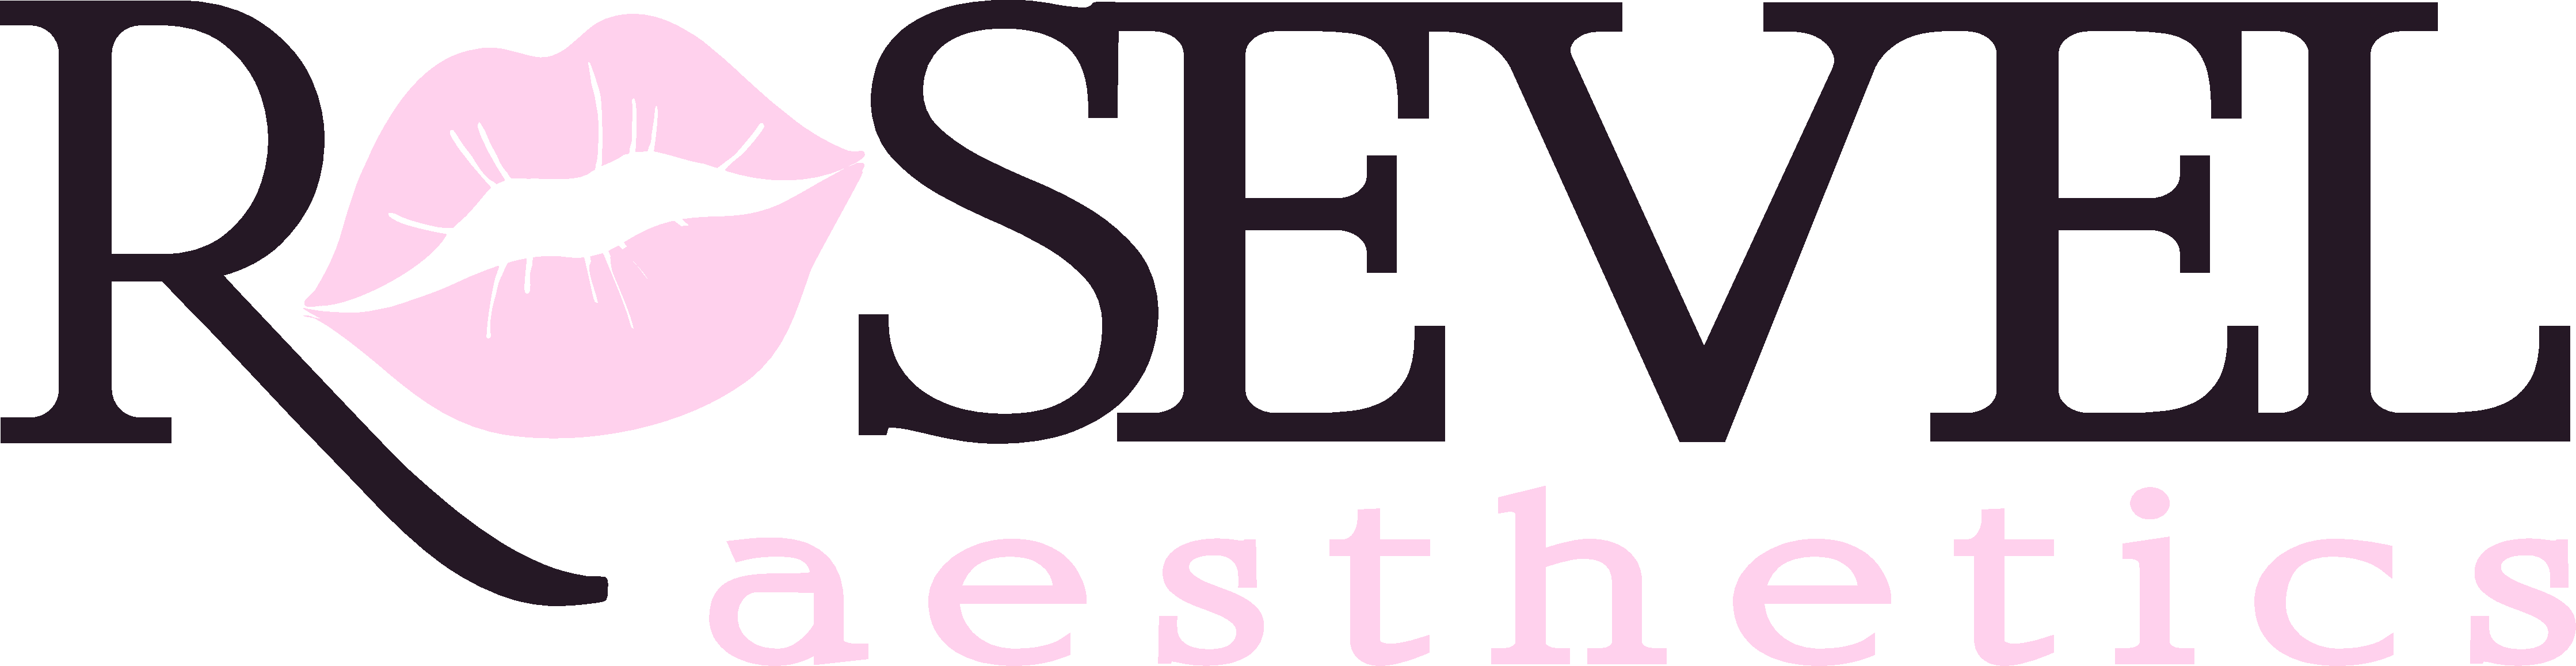 Rosevel Limited logo